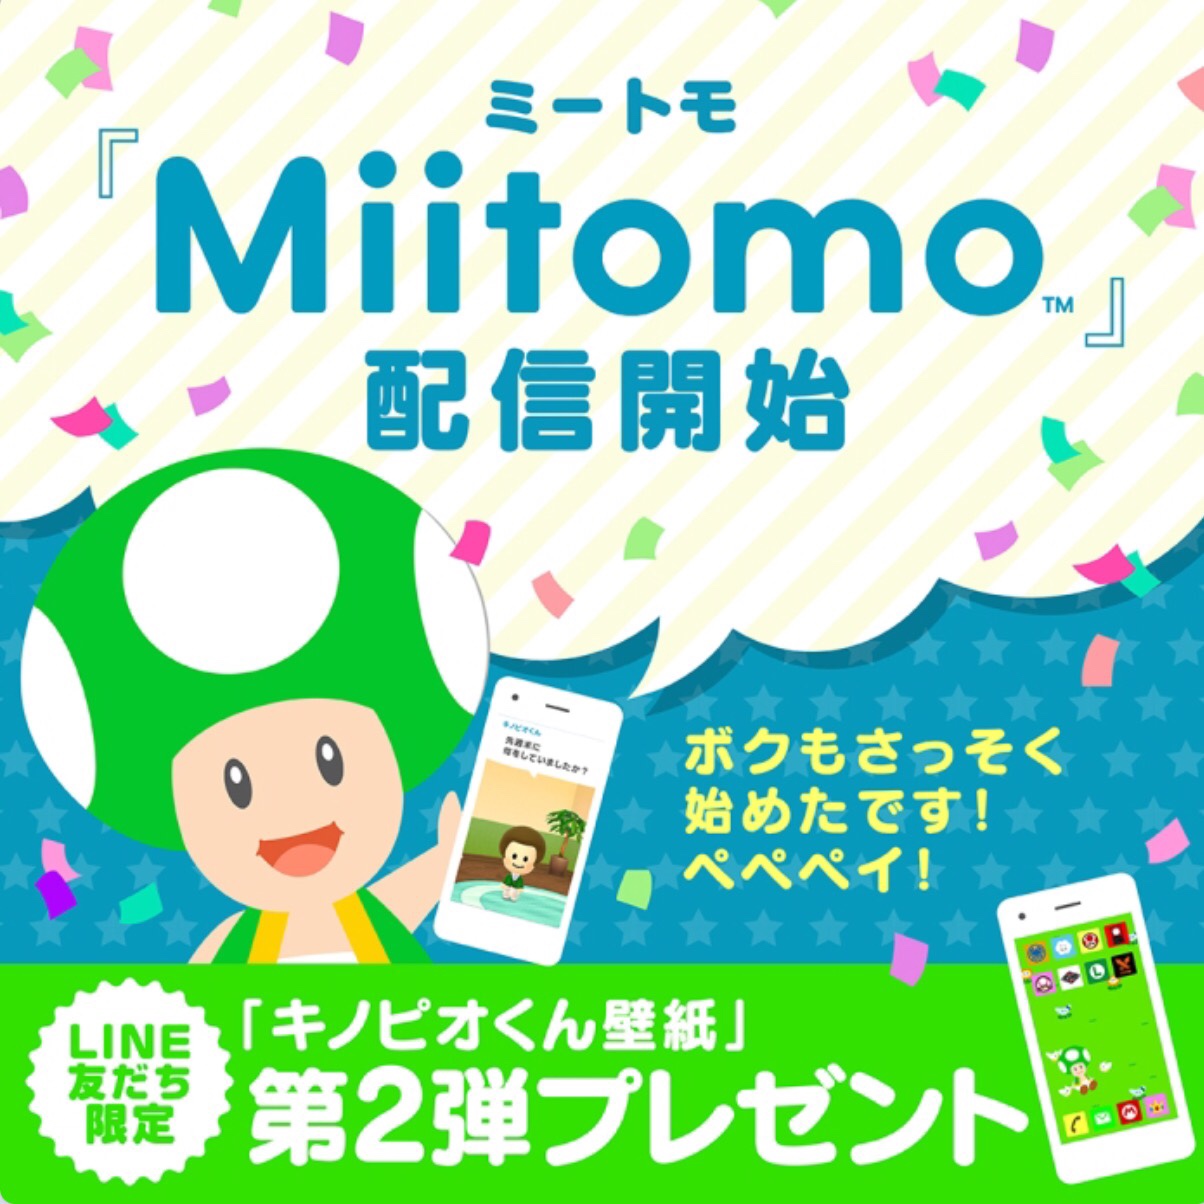 Nintendo Line Account Celebrates Miitomo Launch Gonintendo